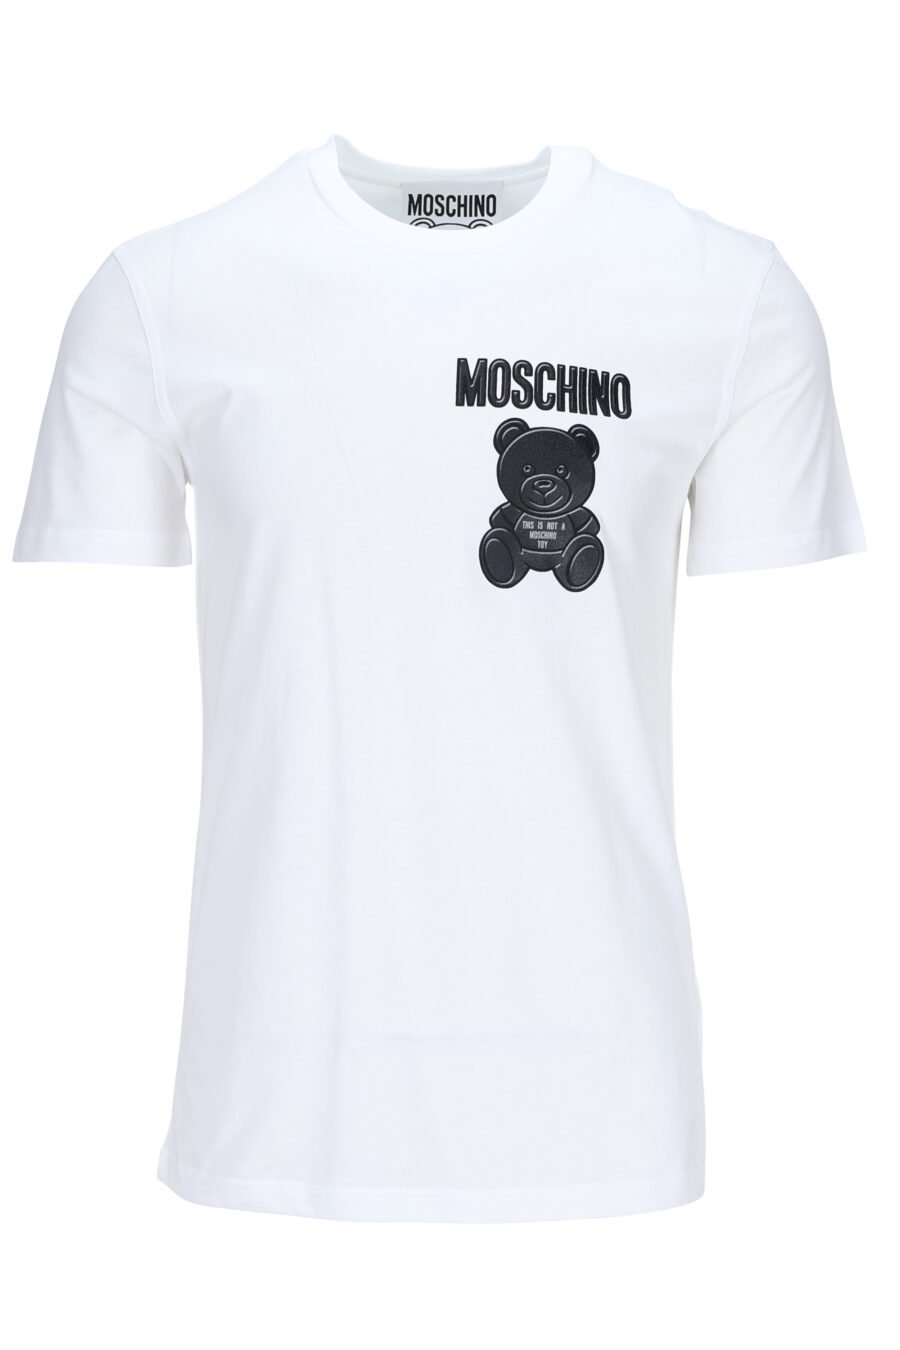 White T-shirt with eco cotton with black mini-logo "teddy" - 889316853131